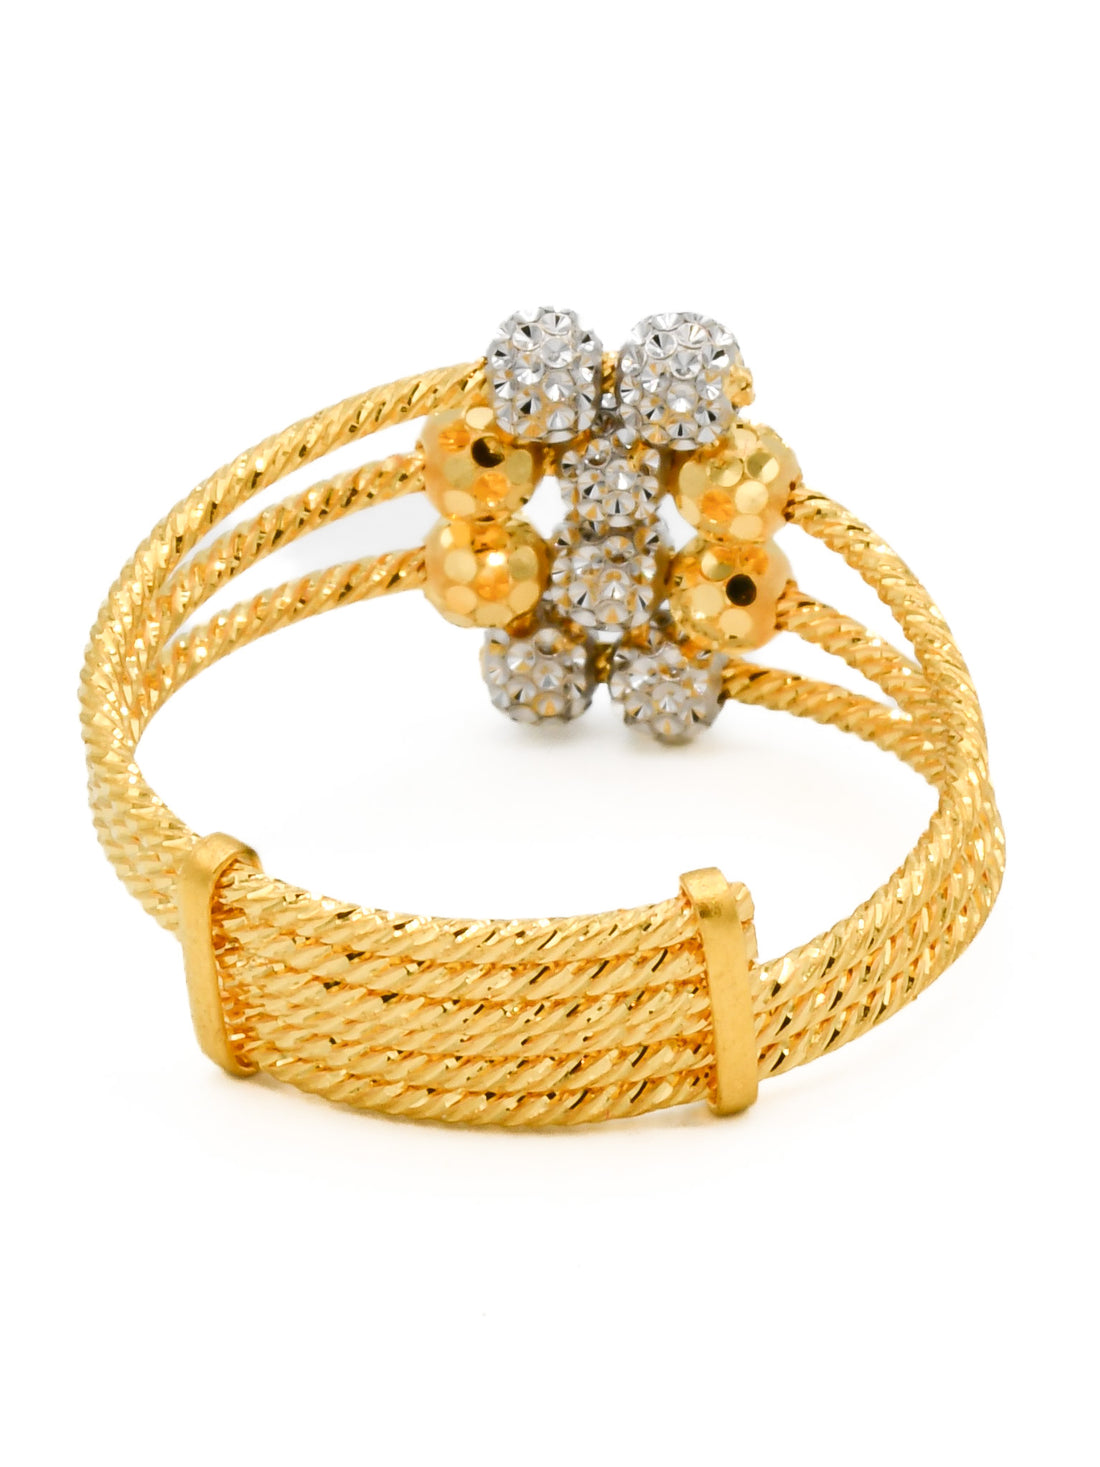 22ct Gold Two Tone Adjustable Ladies Ring - Roop Darshan